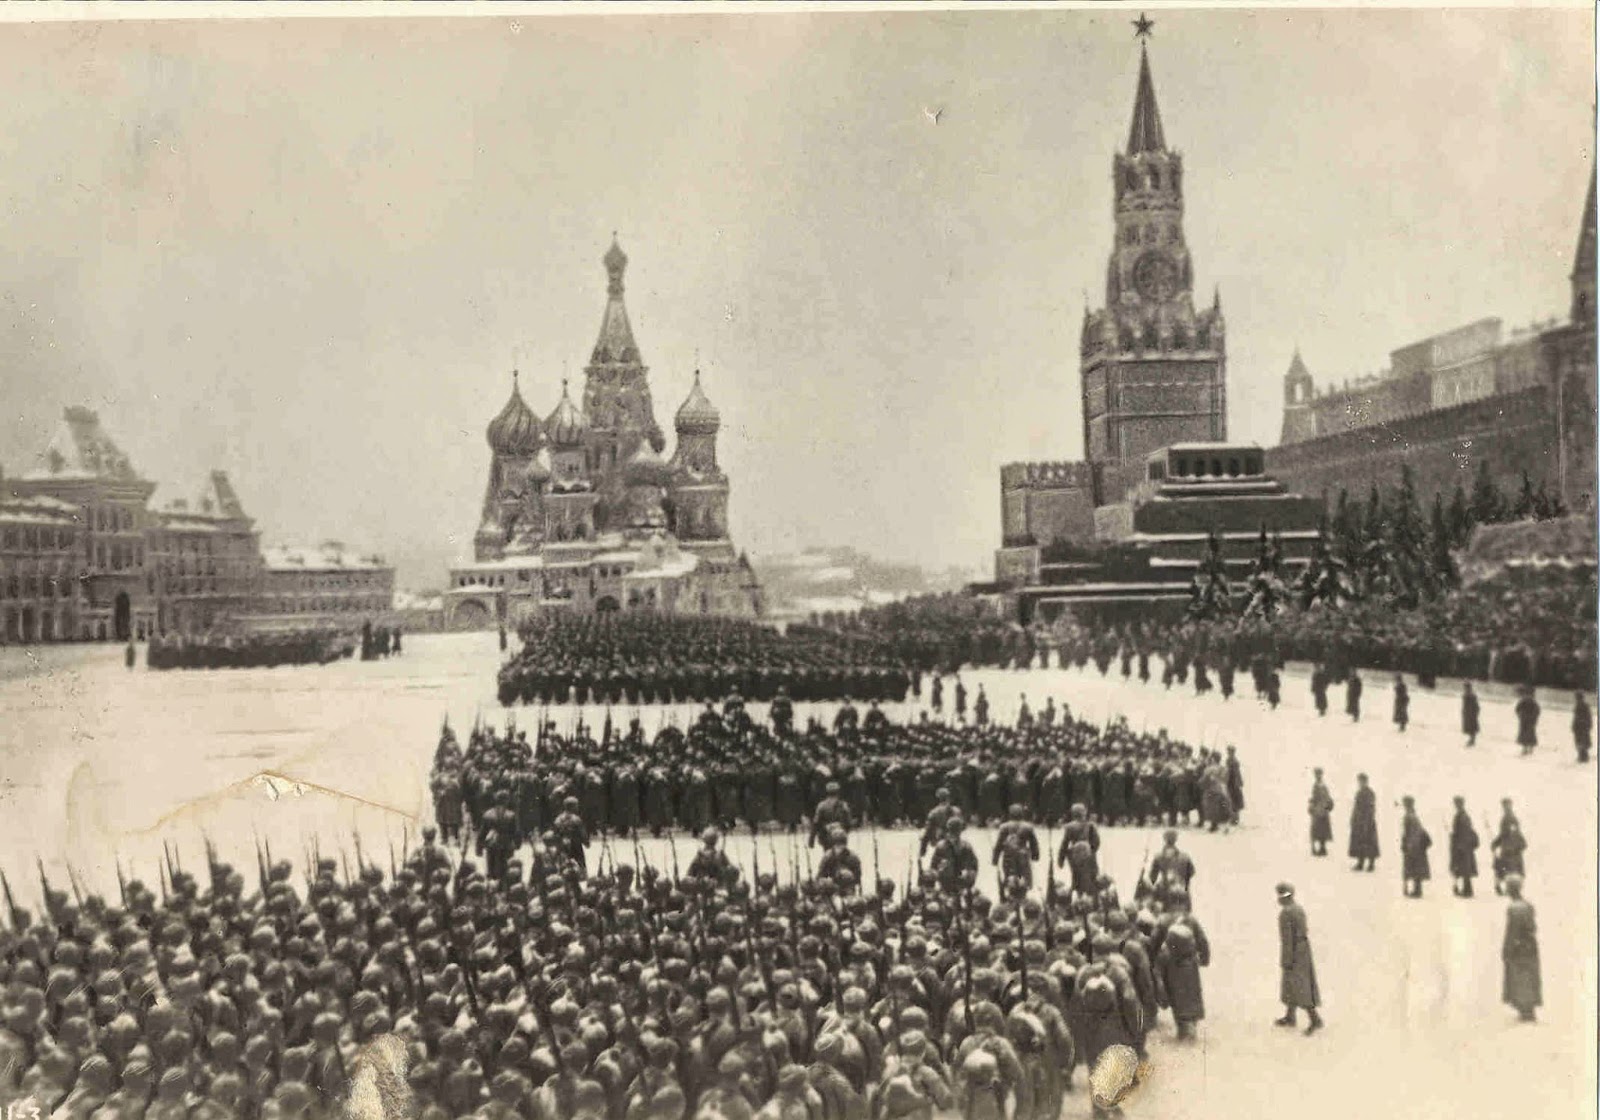 Юон парад 1941. Военный парад 7 ноября 1941 года в Москве на красной площади. Парад на красной площади 7 ноября 1941 года. Парад на красной площади 1941 битва за Москву. Парад на красной площади в Москве 7 ноября 1941 года Юон.